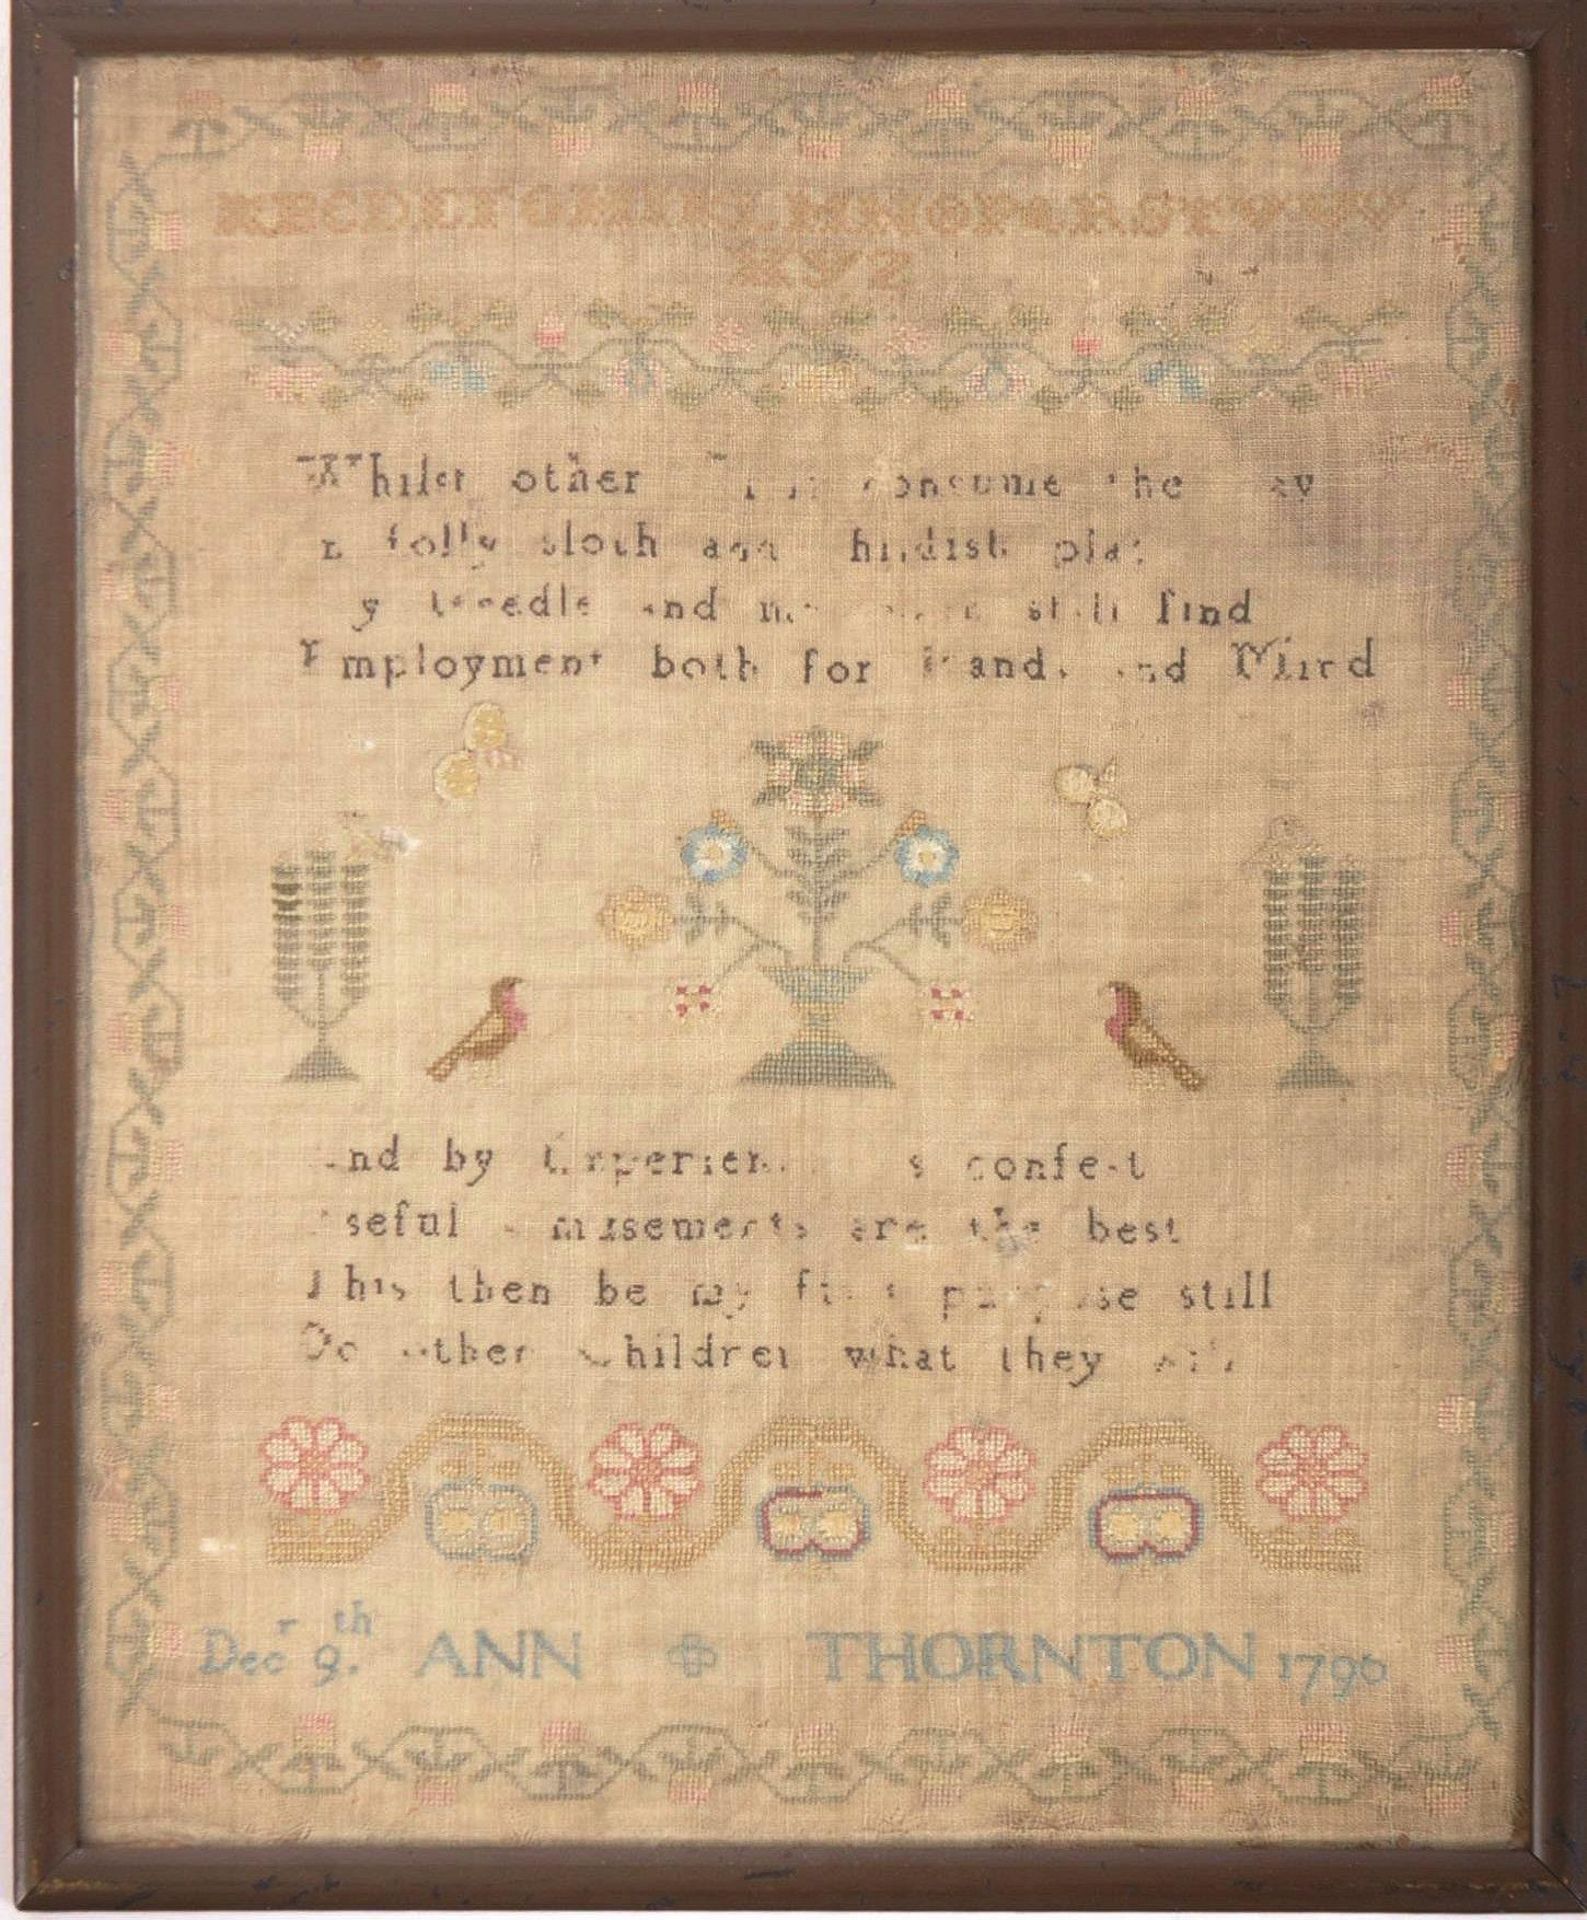 1790 18TH CENTURY NEEDLEPOINT SAMPLER - ANN THORNTON